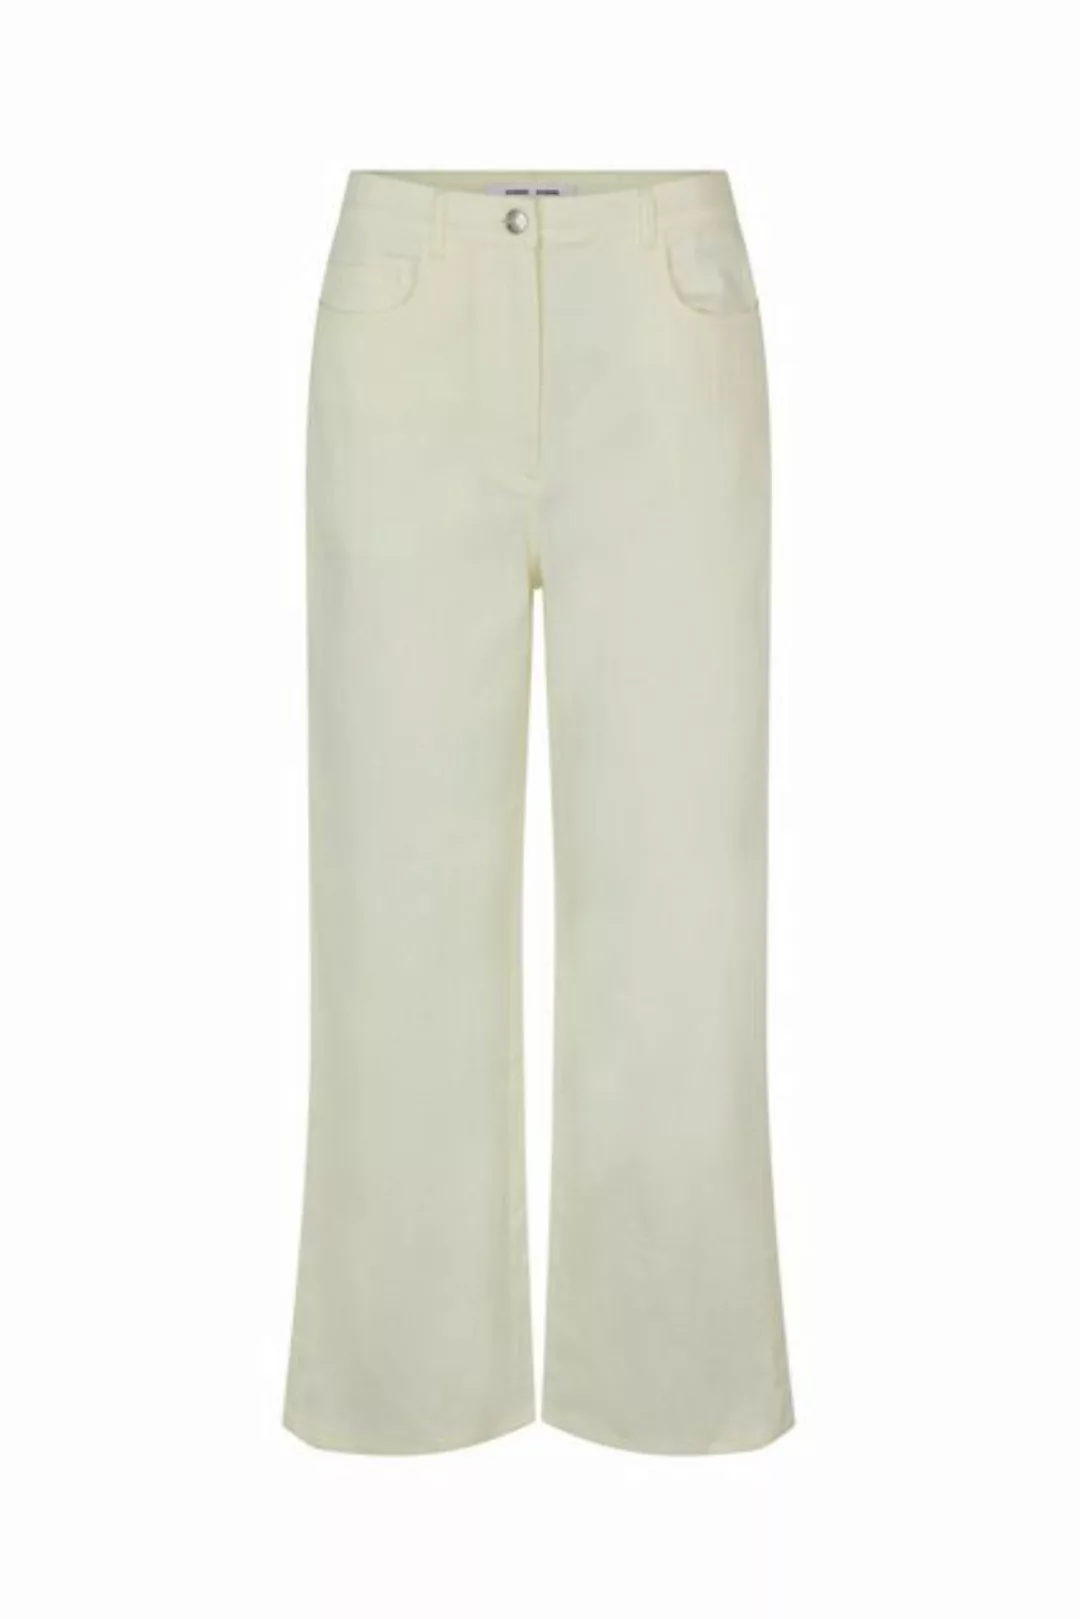 Samsoe & Samsoe 5-Pocket-Hose Sashelly trousers 15127 günstig online kaufen